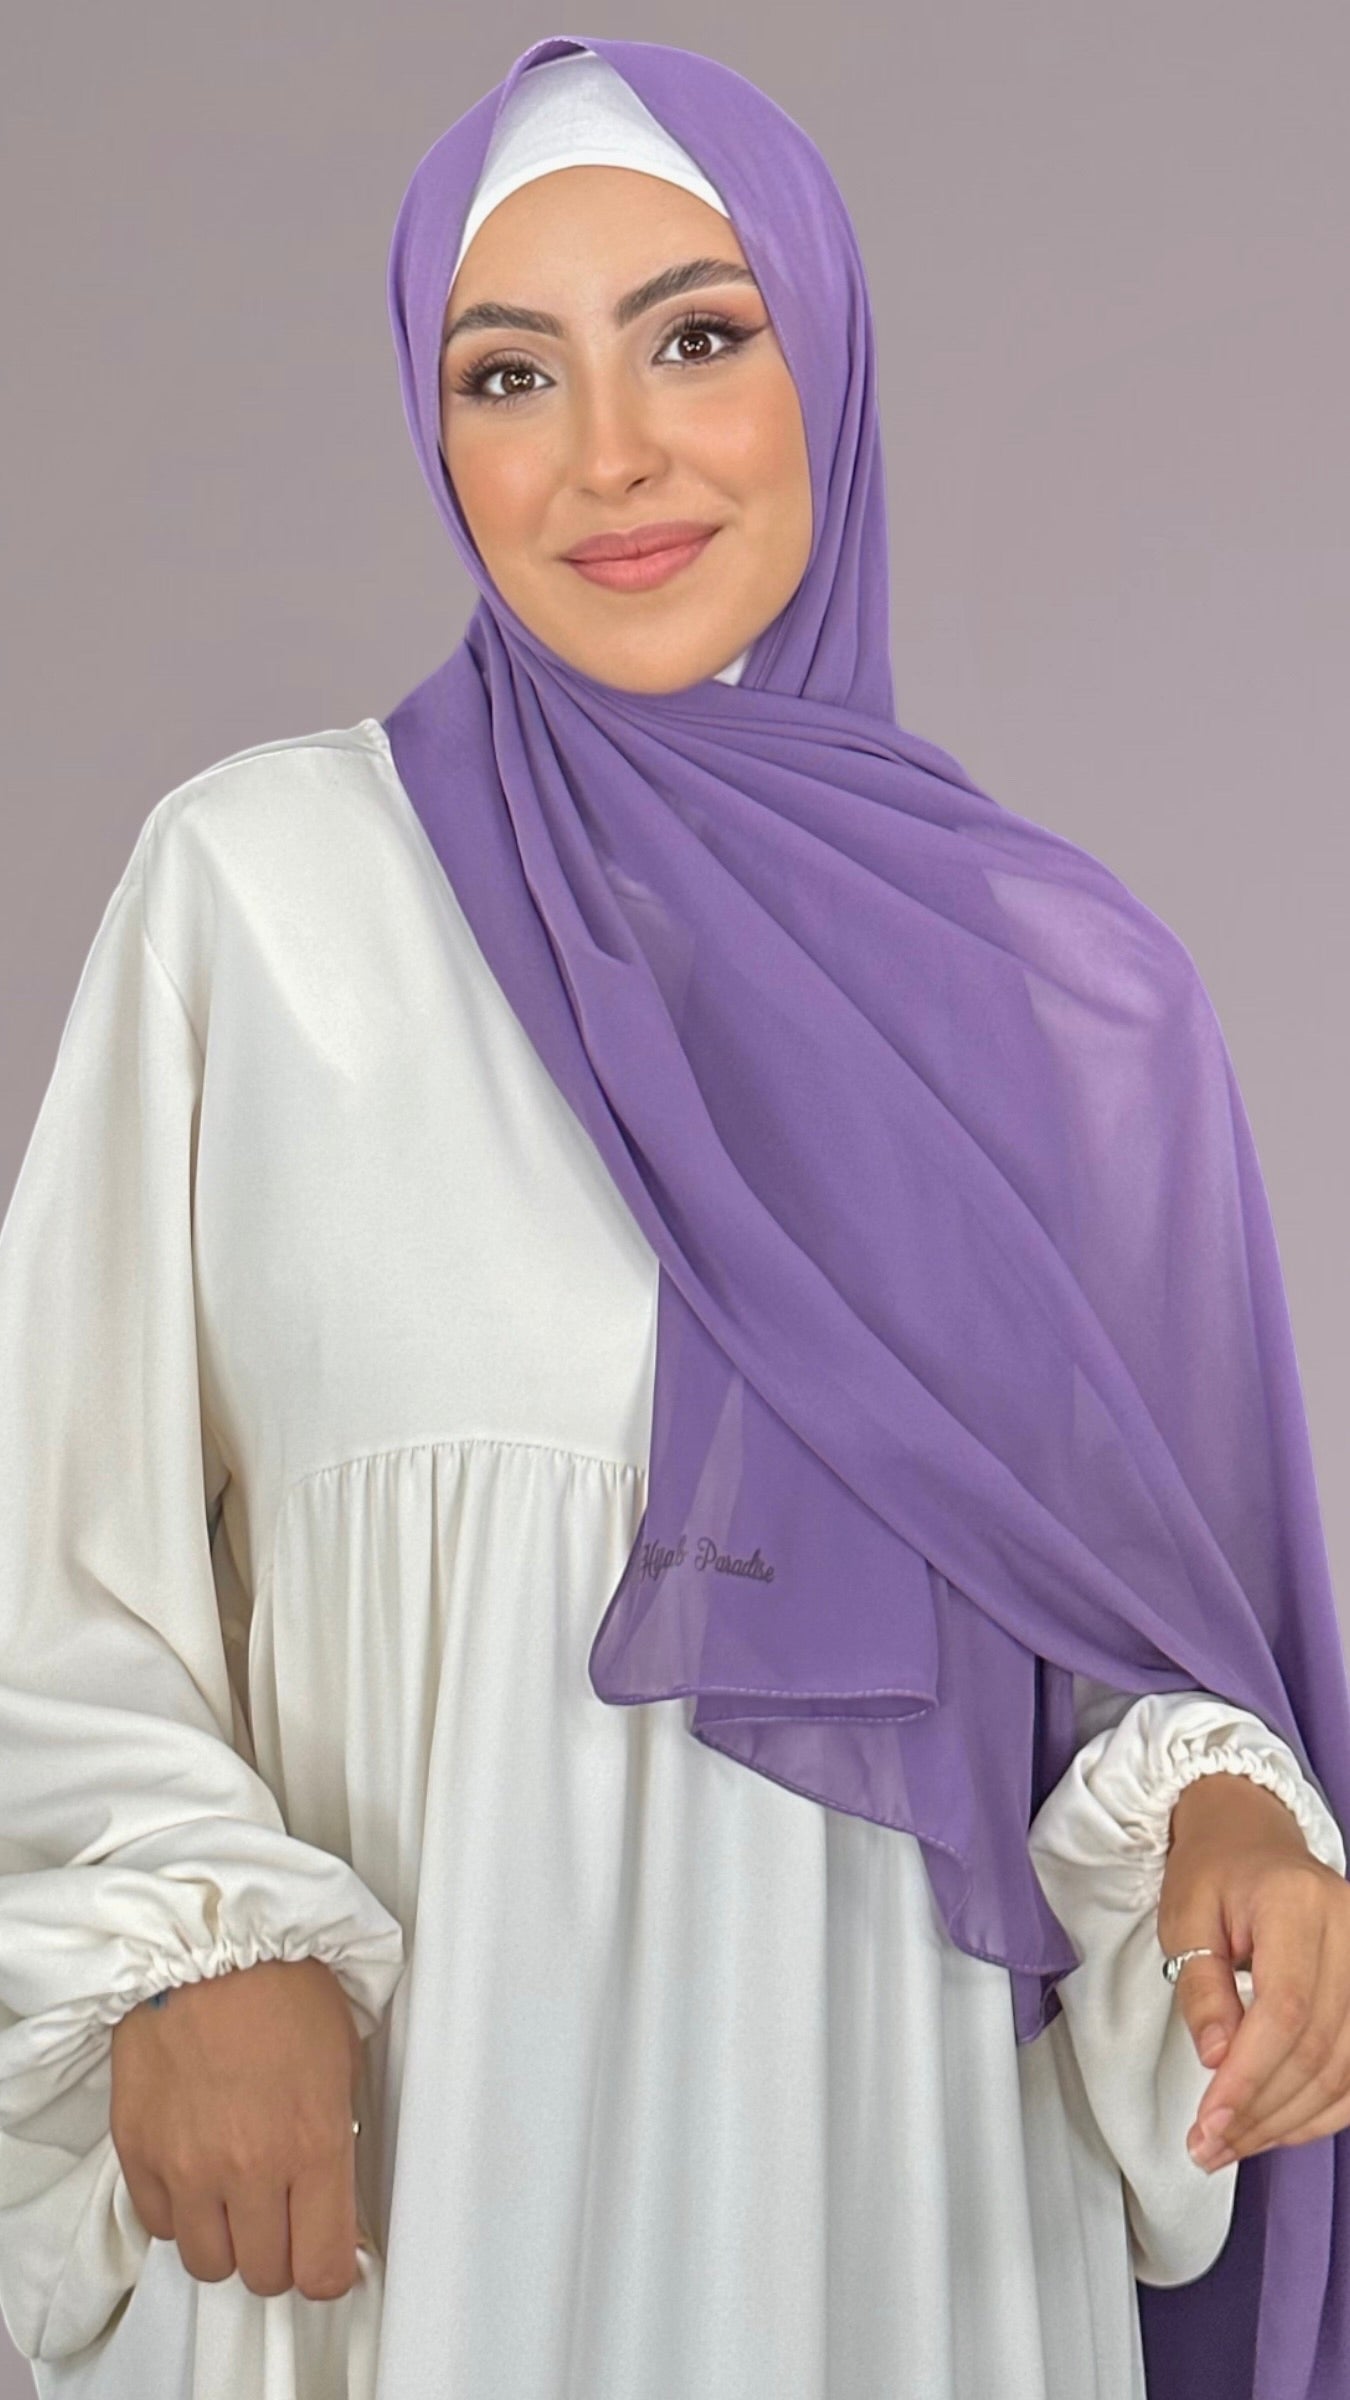 Hijab, chador, velo, turbante, foulard, copricapo, musulmano, islamico, sciarpa,  trasparente, chiffon crepe, hijab viola